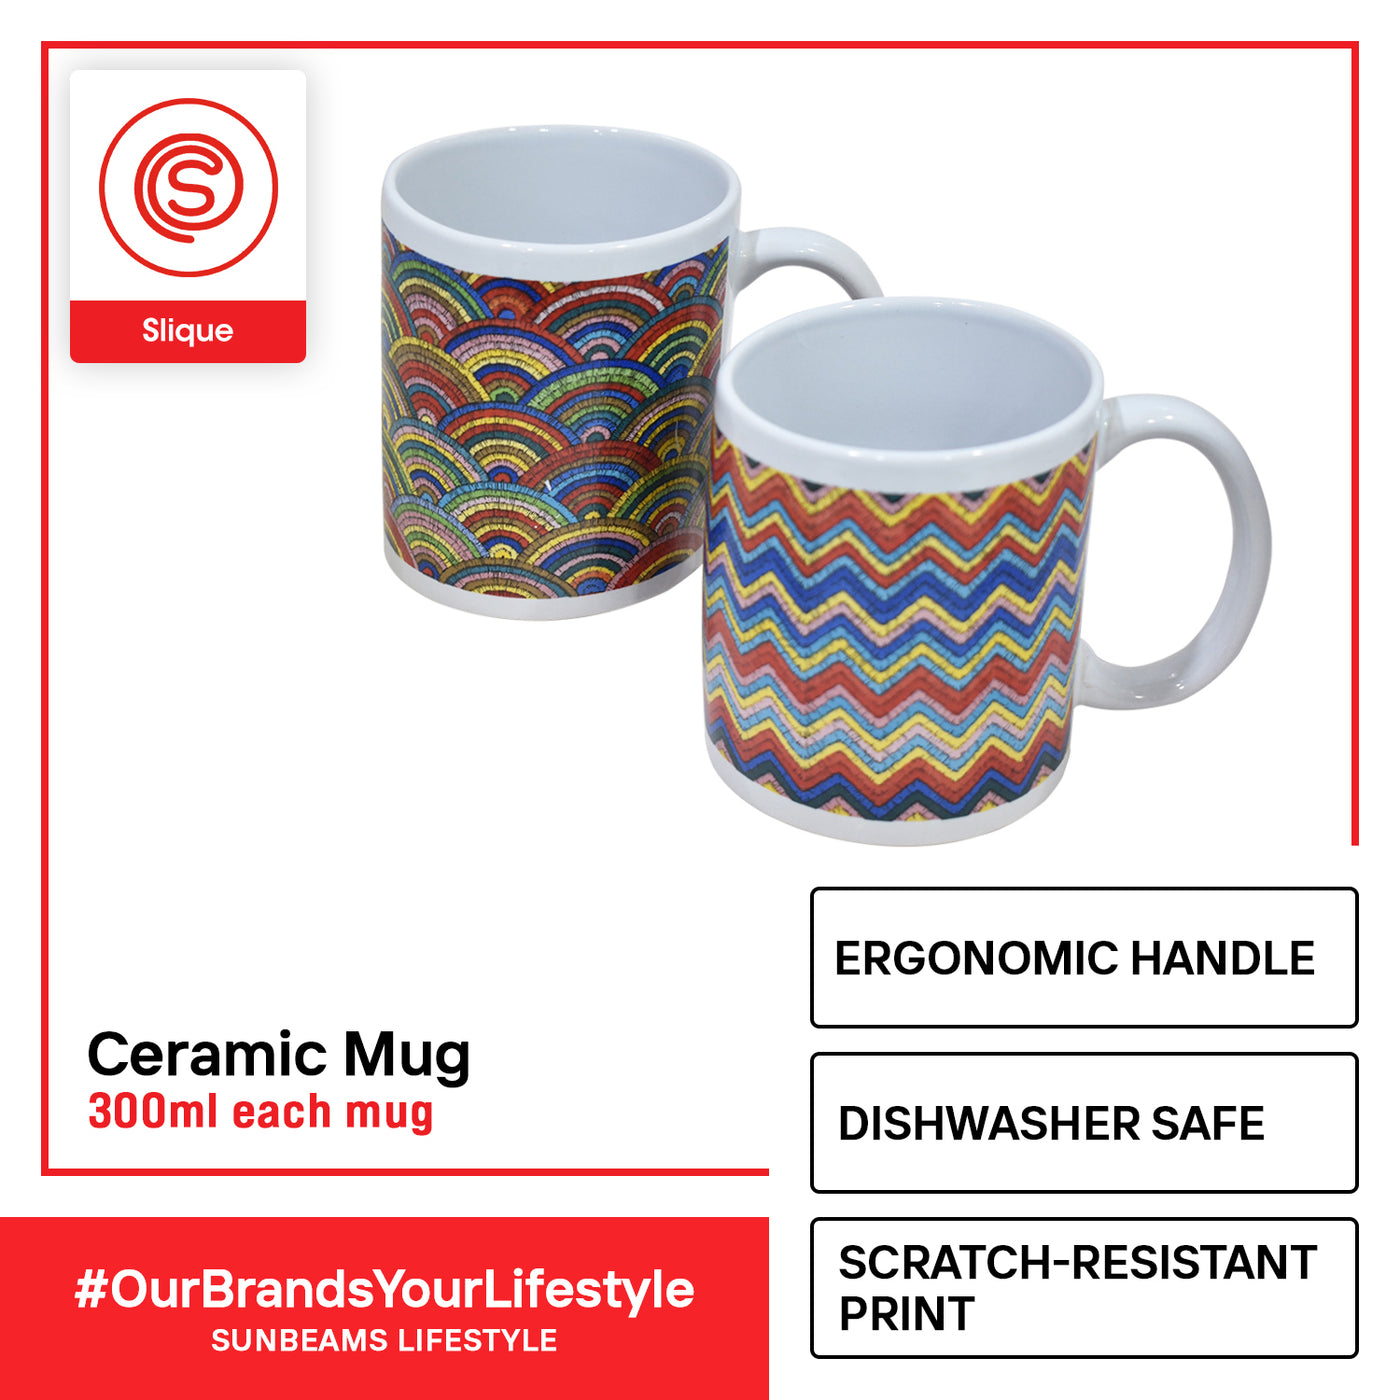 SLIQUE Premium Ceramic Mug Limited Edition Design 300ml Set of 2 Amazing Gift Idea For Any Occasion! (Artwork)